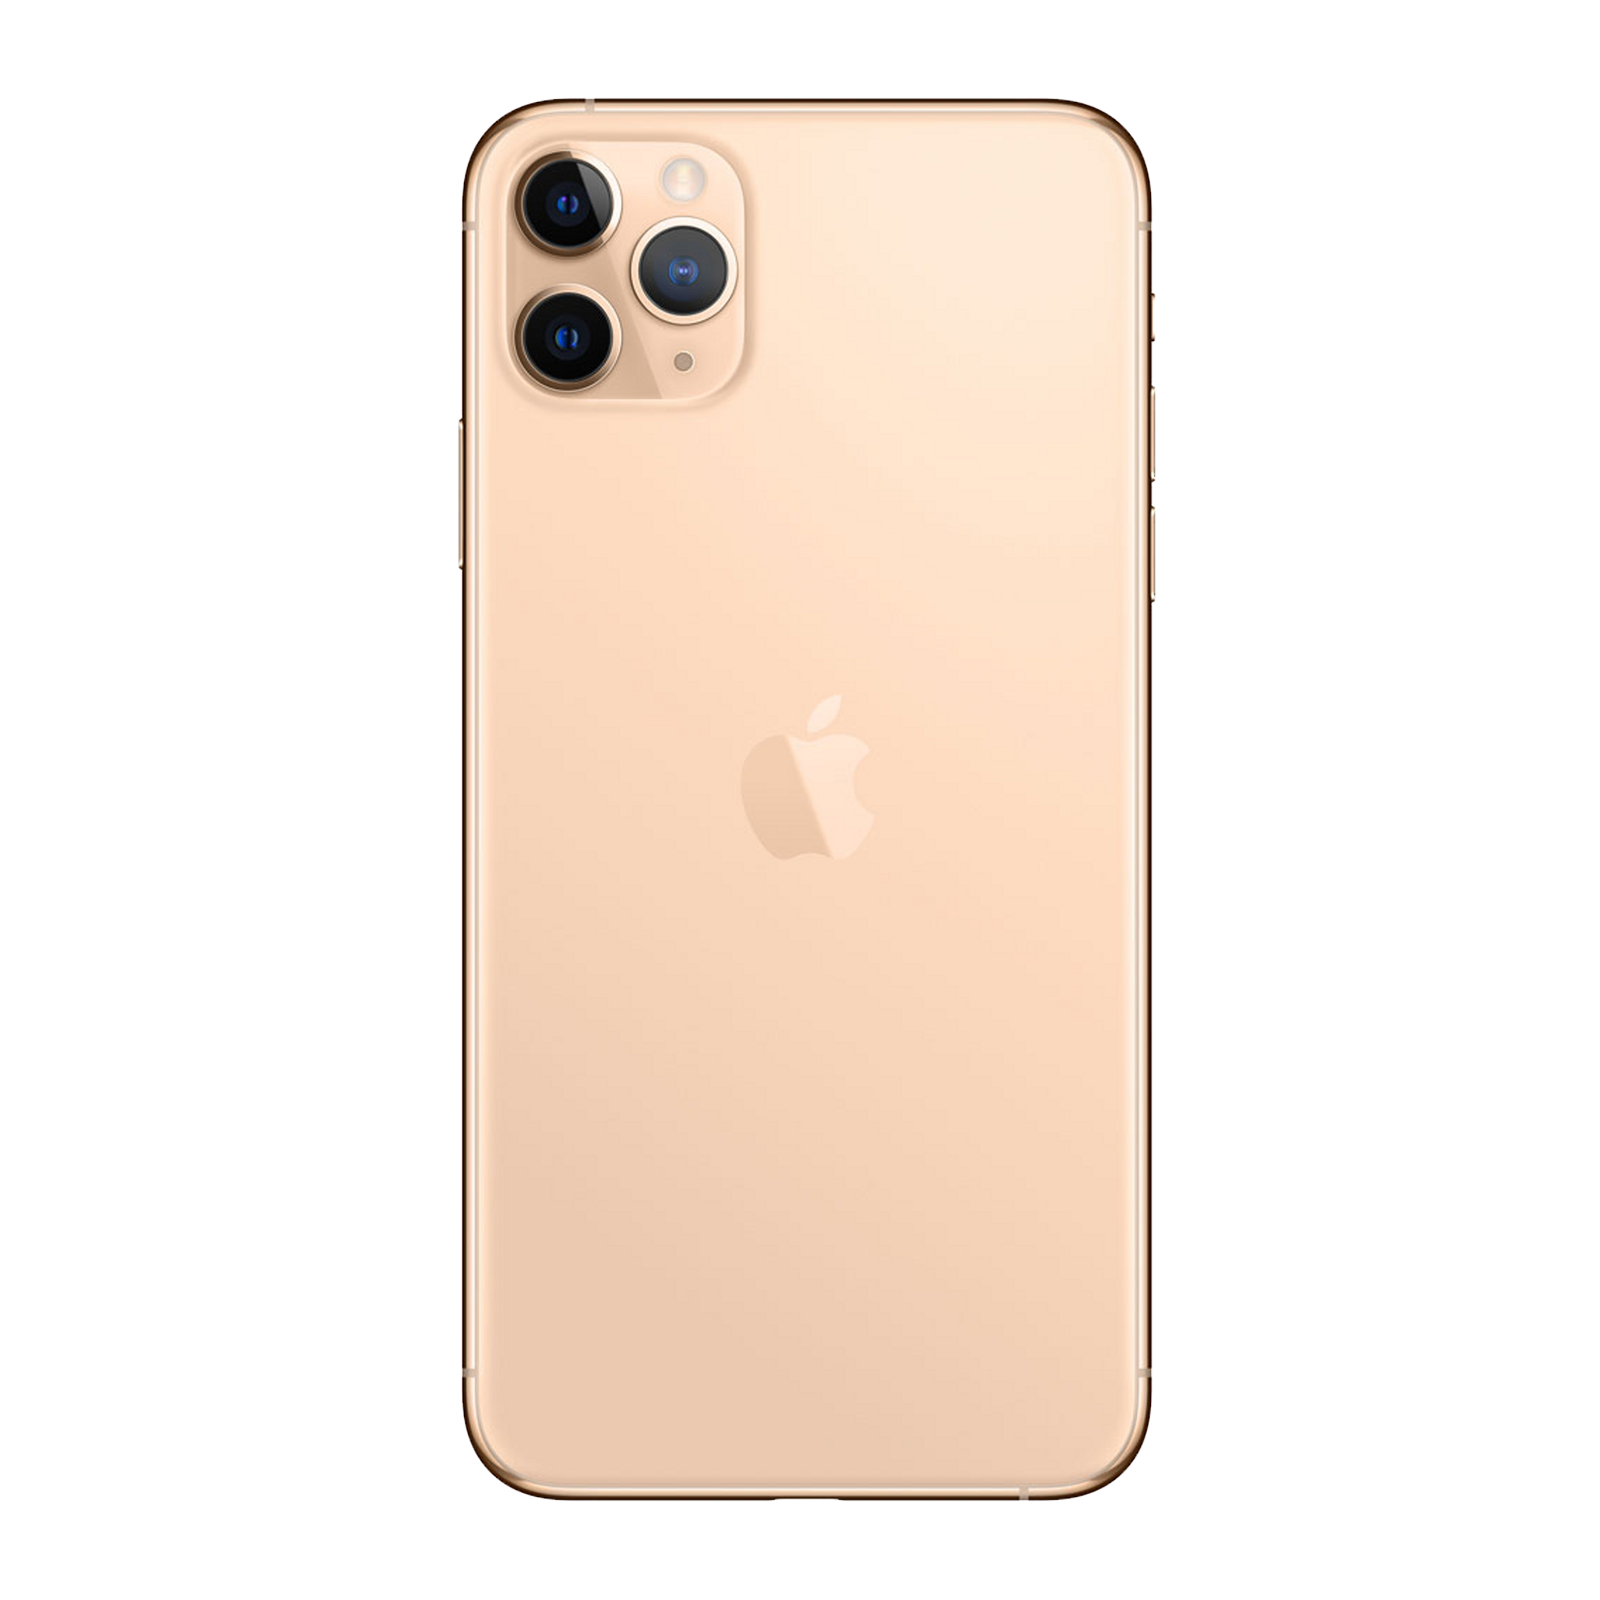 Apple iPhone 11 Pro Max 256GB Gold Pristine - AT&T